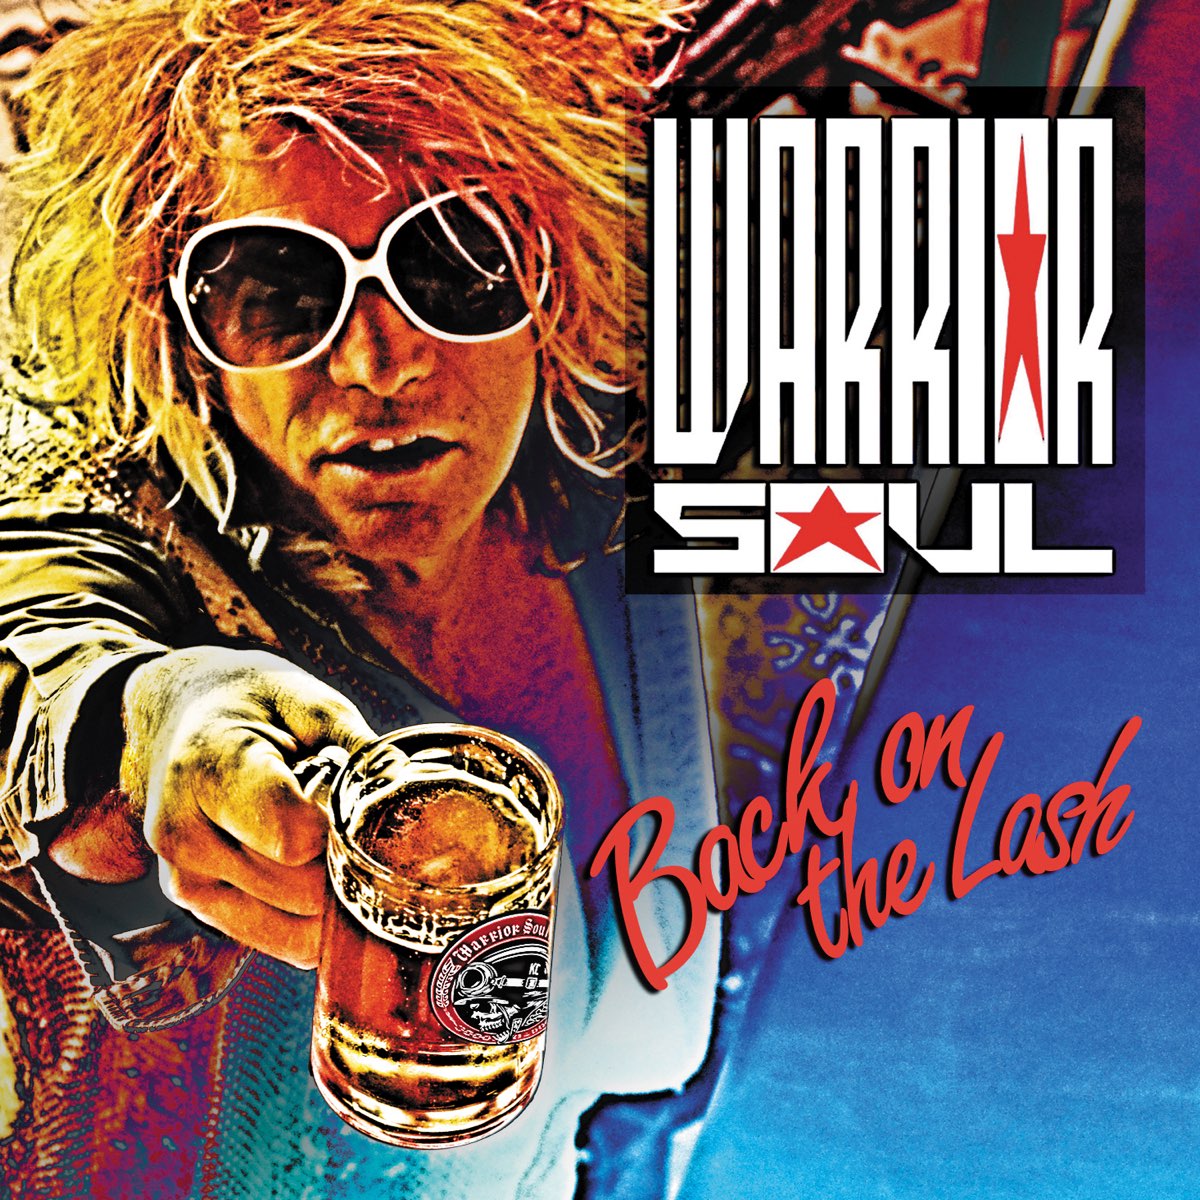 Warrior Soul. Warrior Soul Band. Warrior Soul обложки альбомов. Kory Clarke Warrior Soul. Back souls